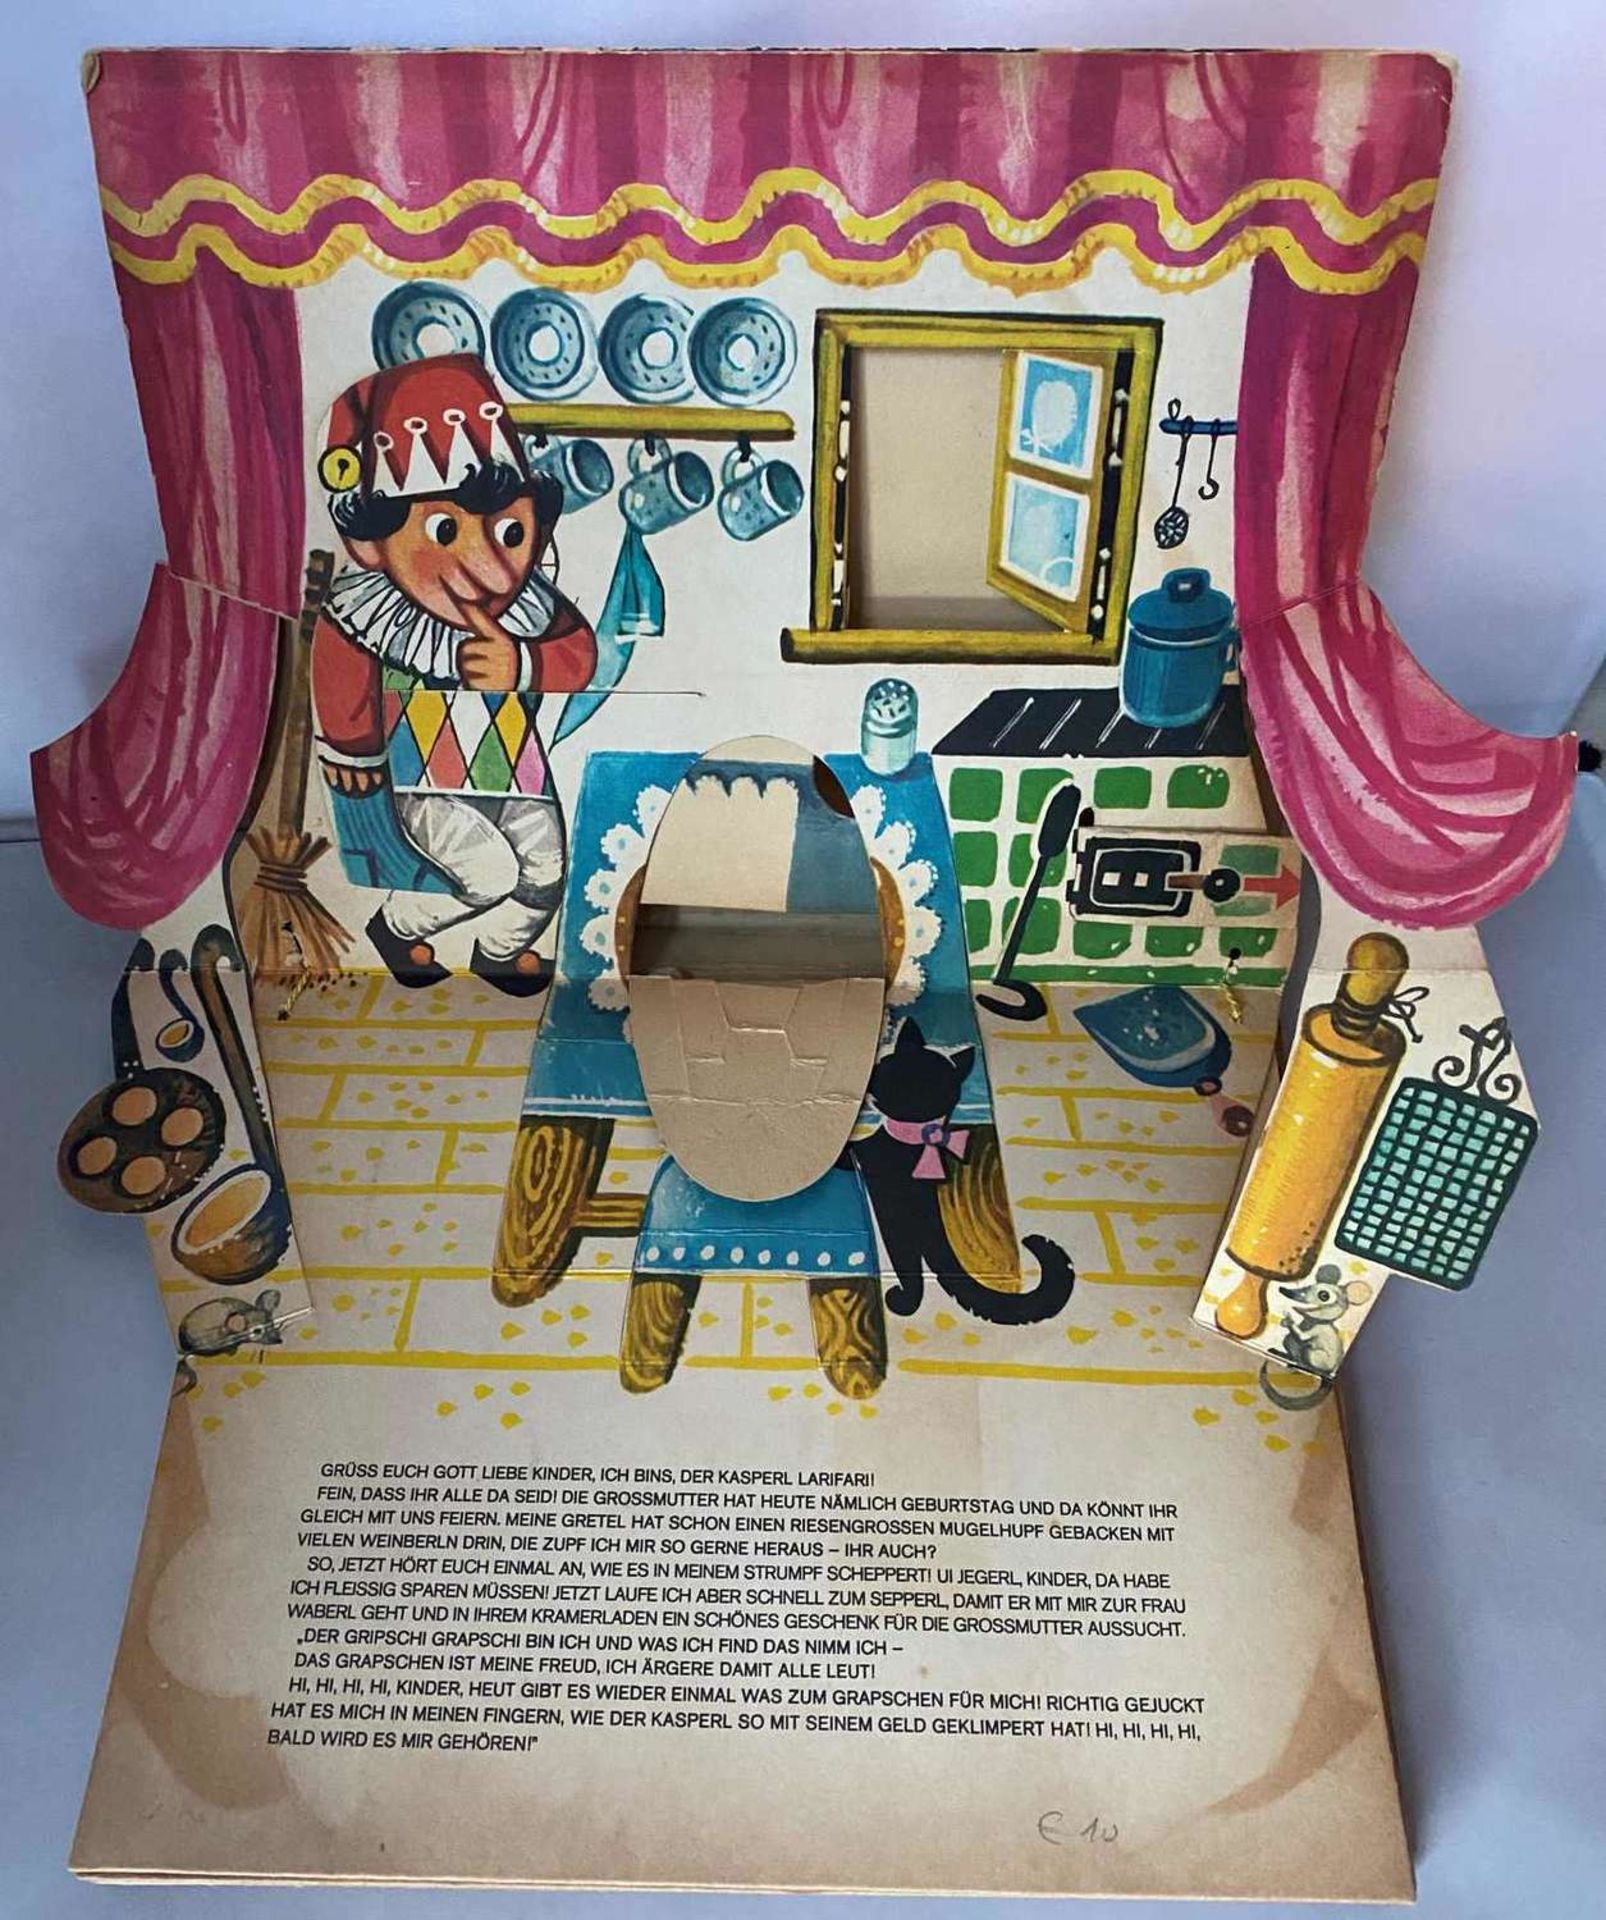 Kinderbuch : Kinder seid ihr alle da ? - Pop-up-Buch, Frick Verlag - Wien. Illustrationen V. Kubast - Image 2 of 6